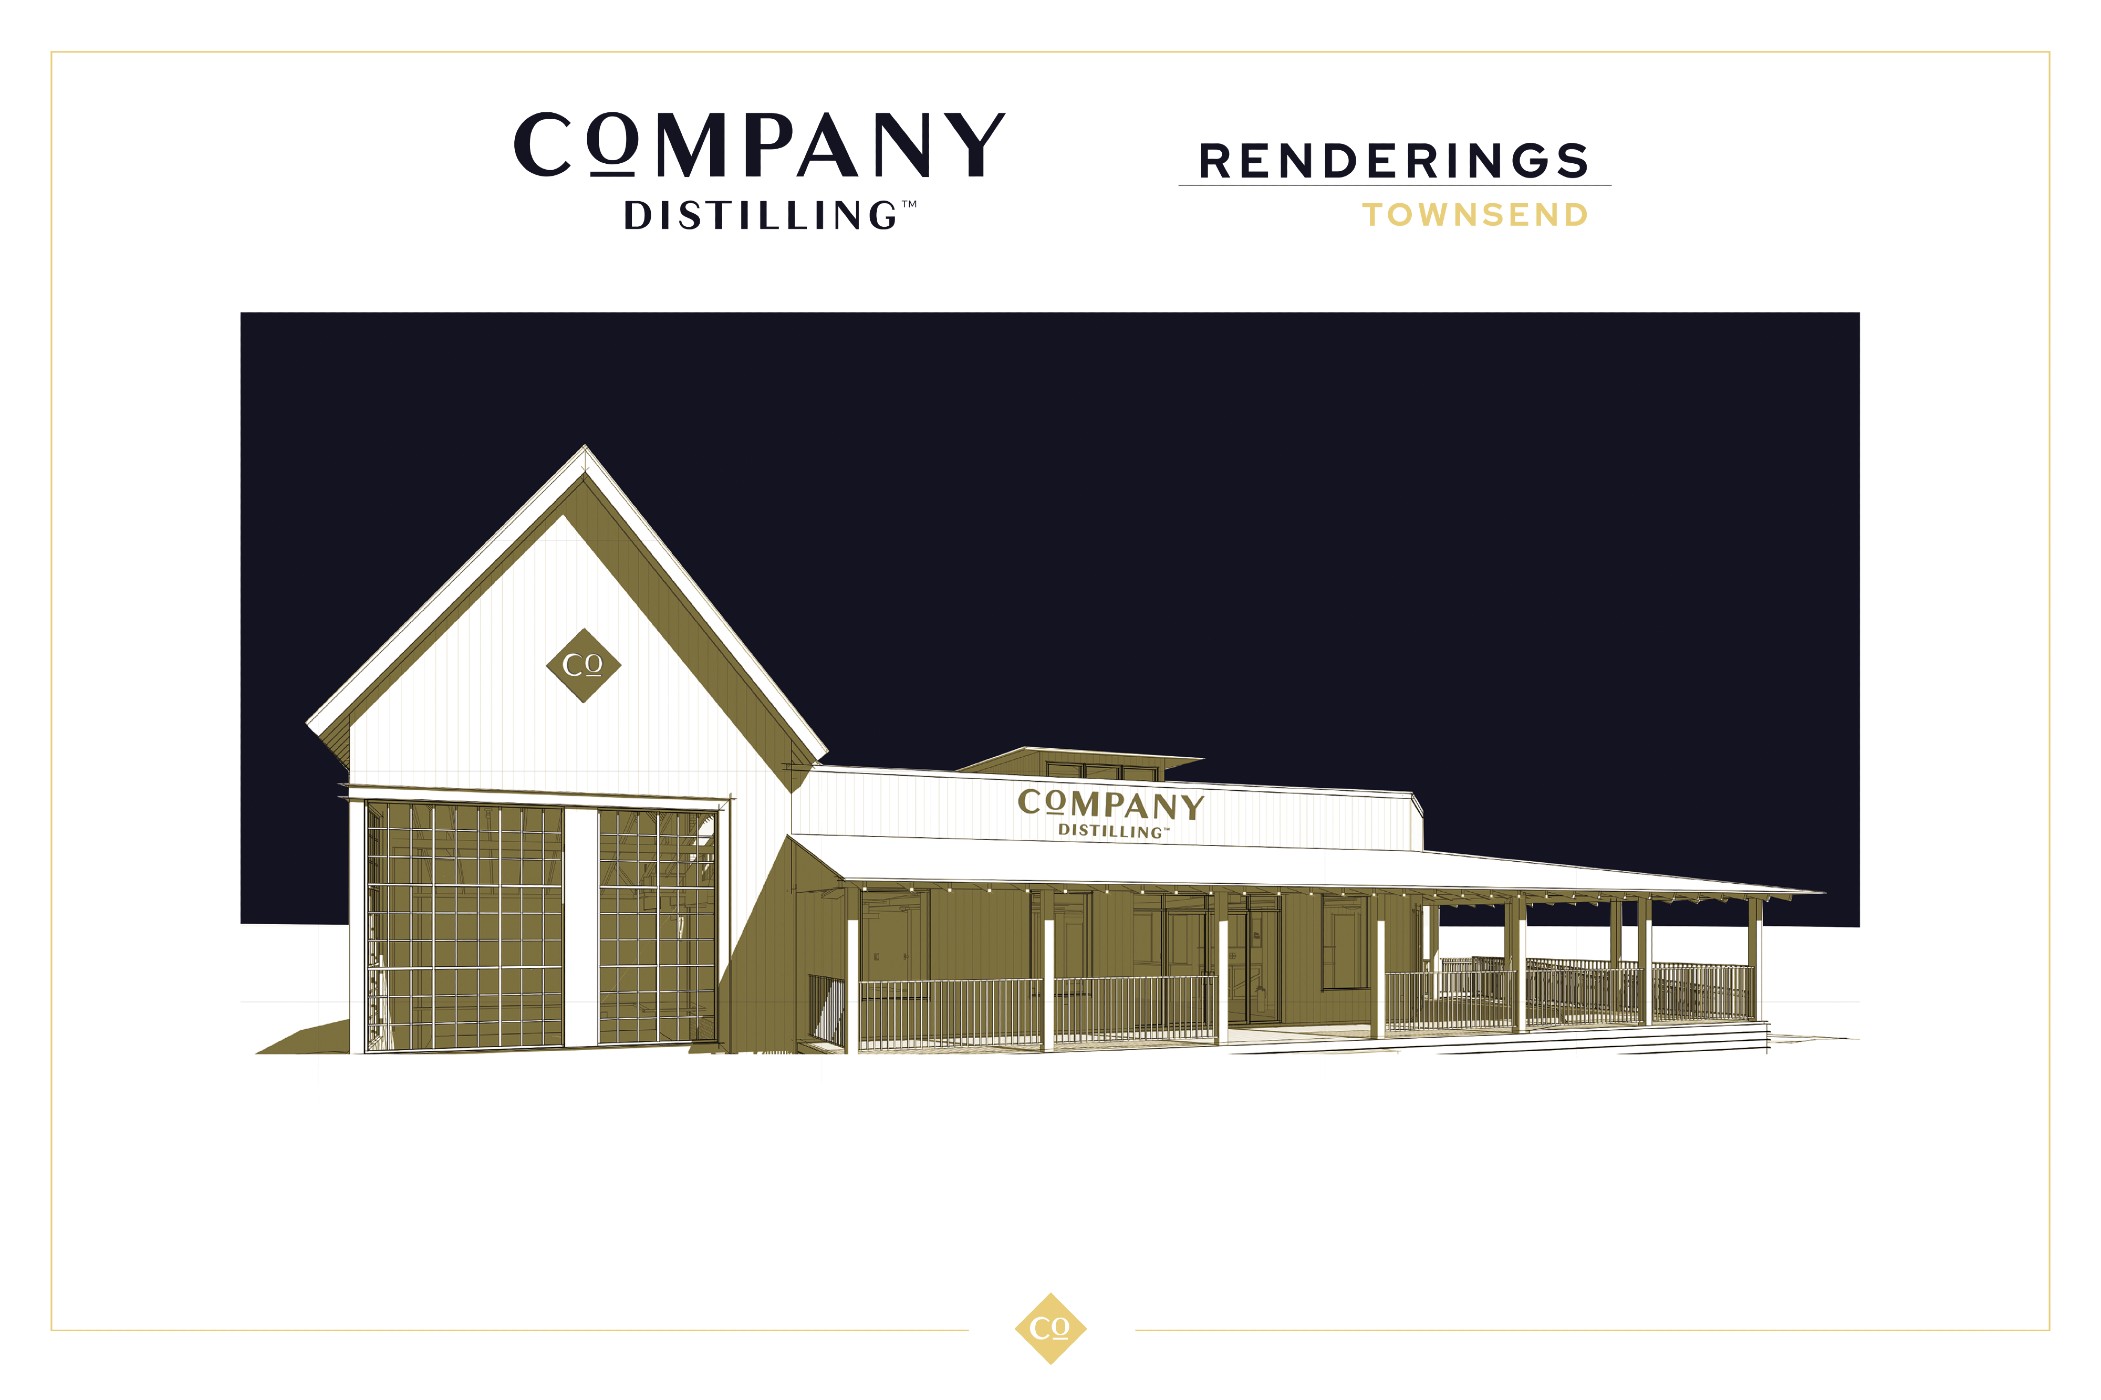 Company Distilling plans